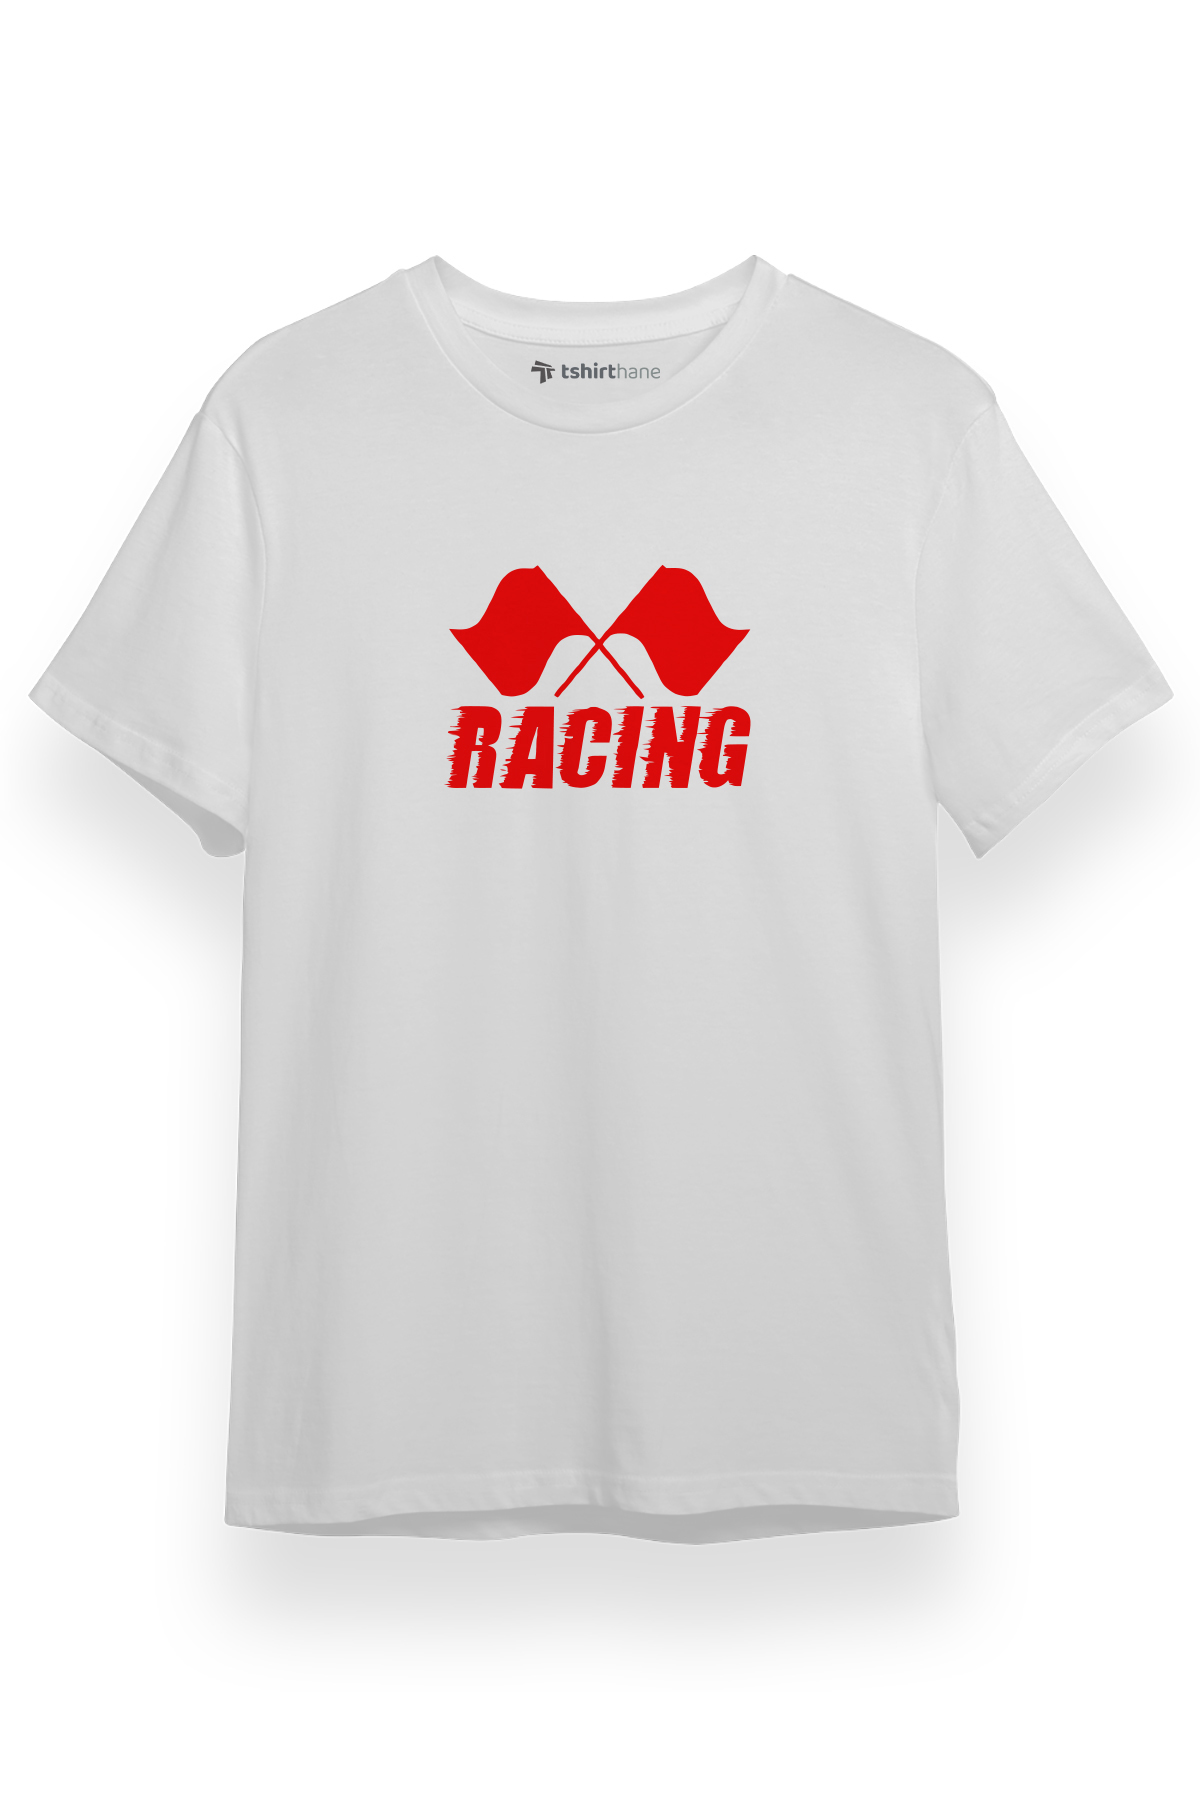 Racing Flag Beyaz Kısa kol Erkek Tshirt